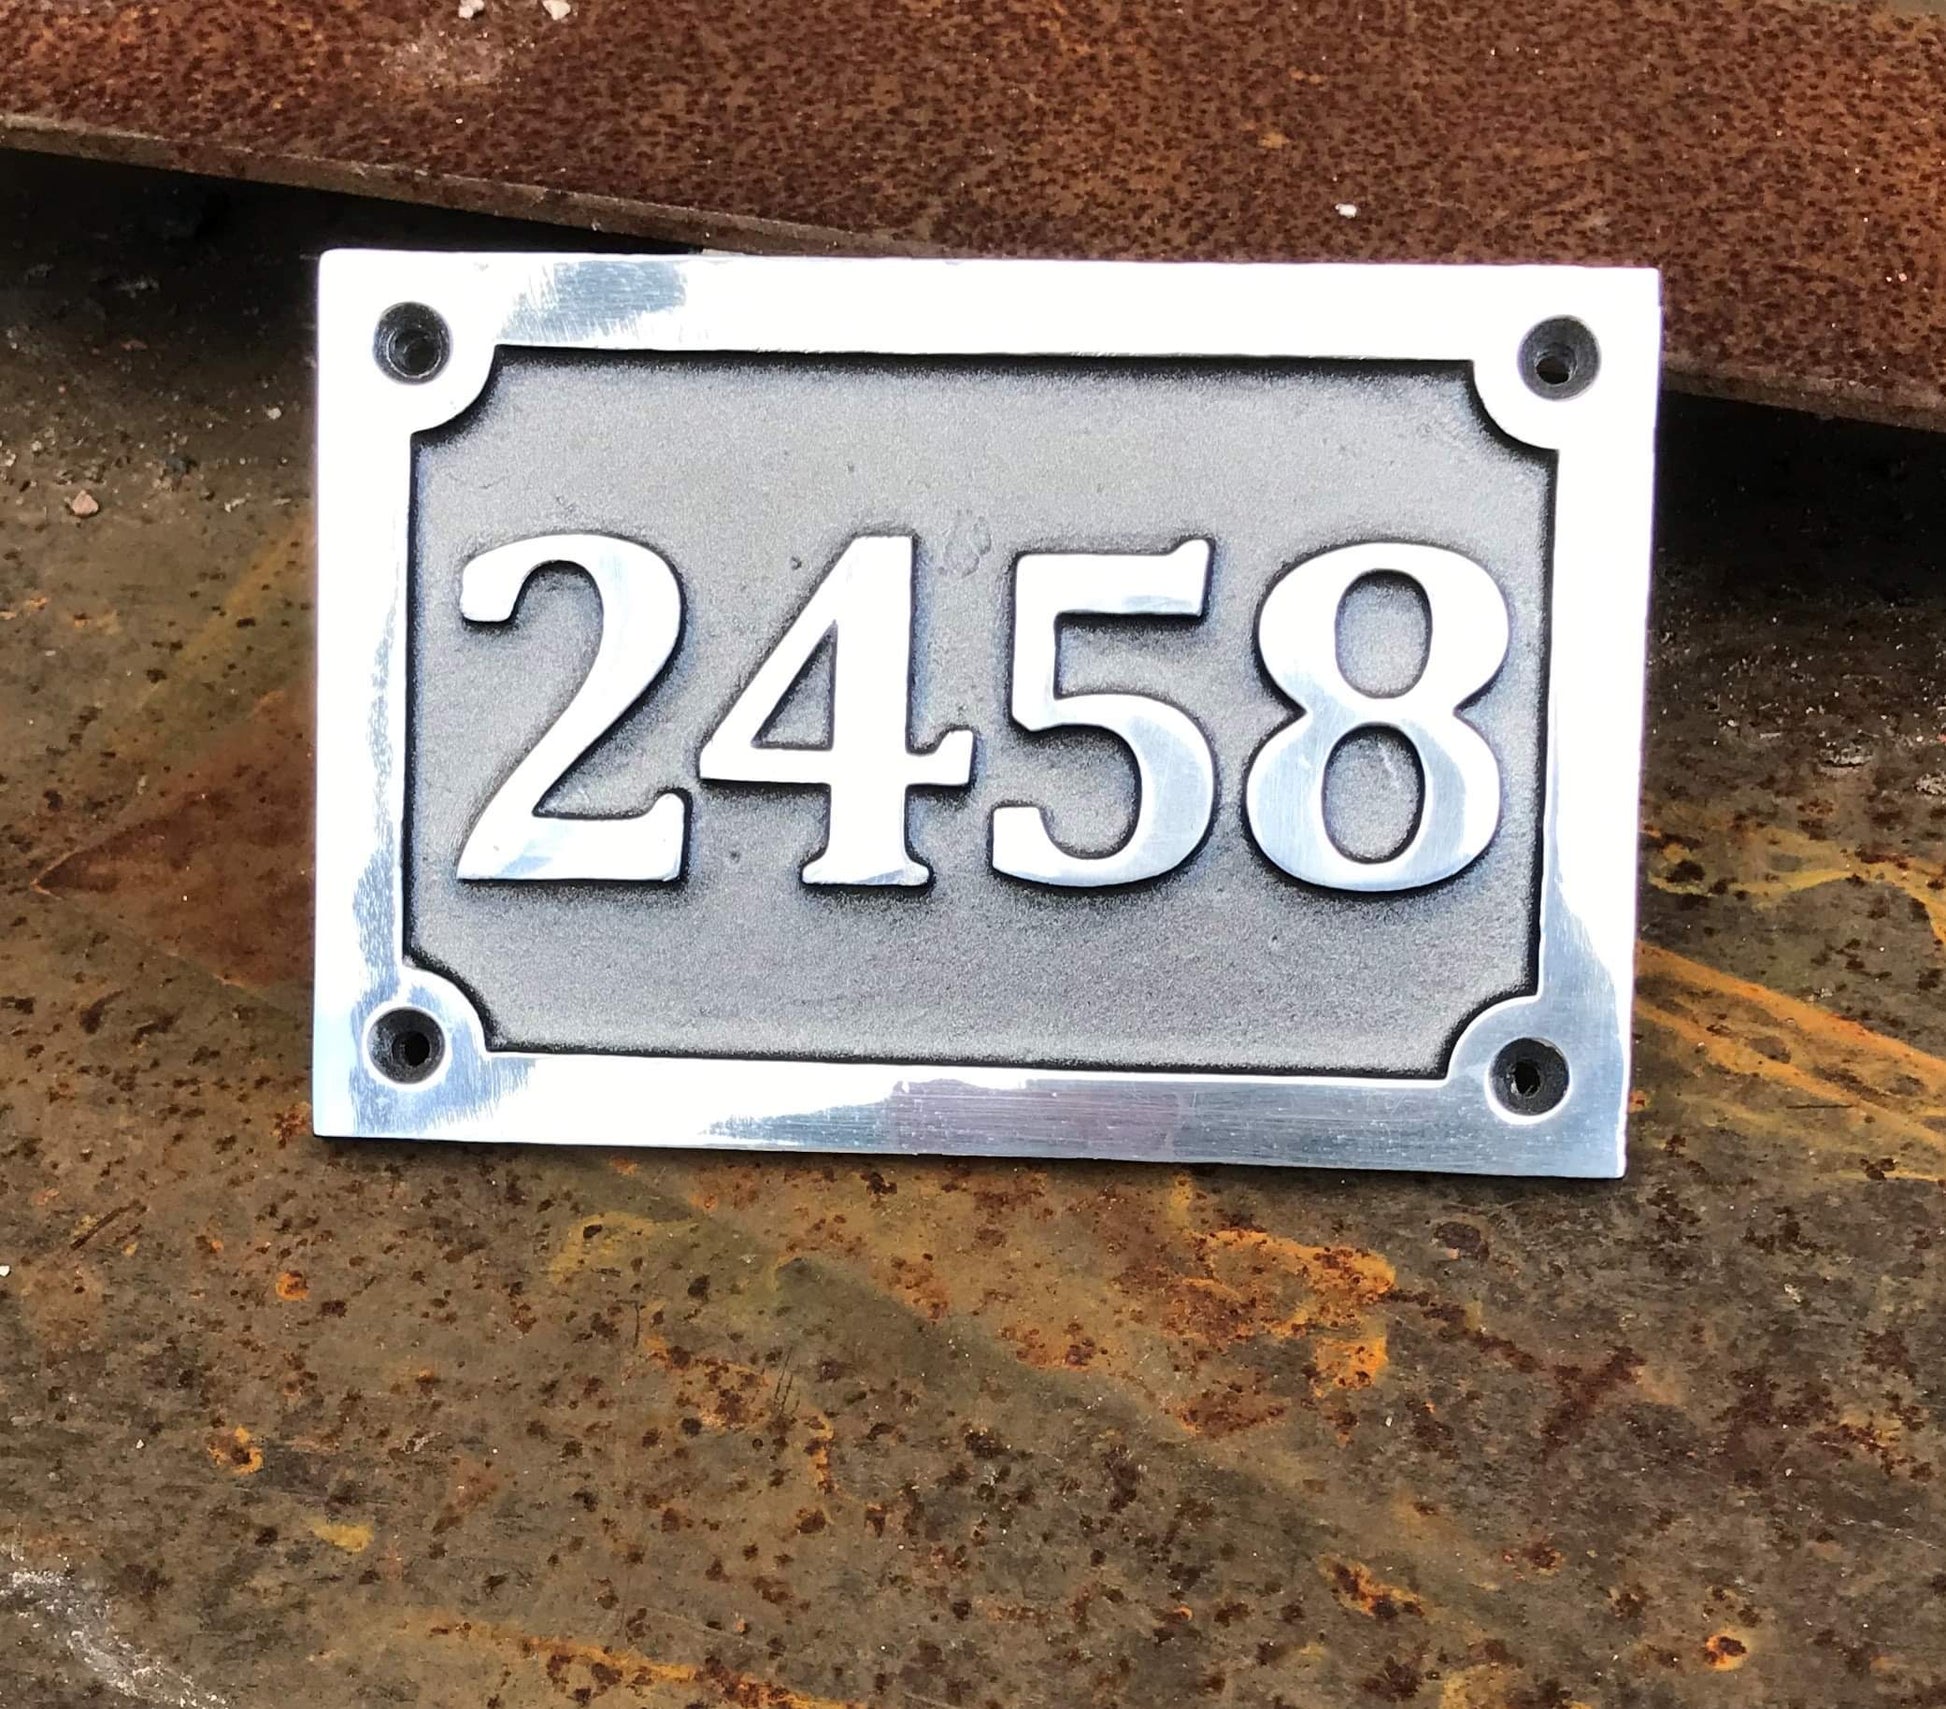 House number sign aluminium rectangle